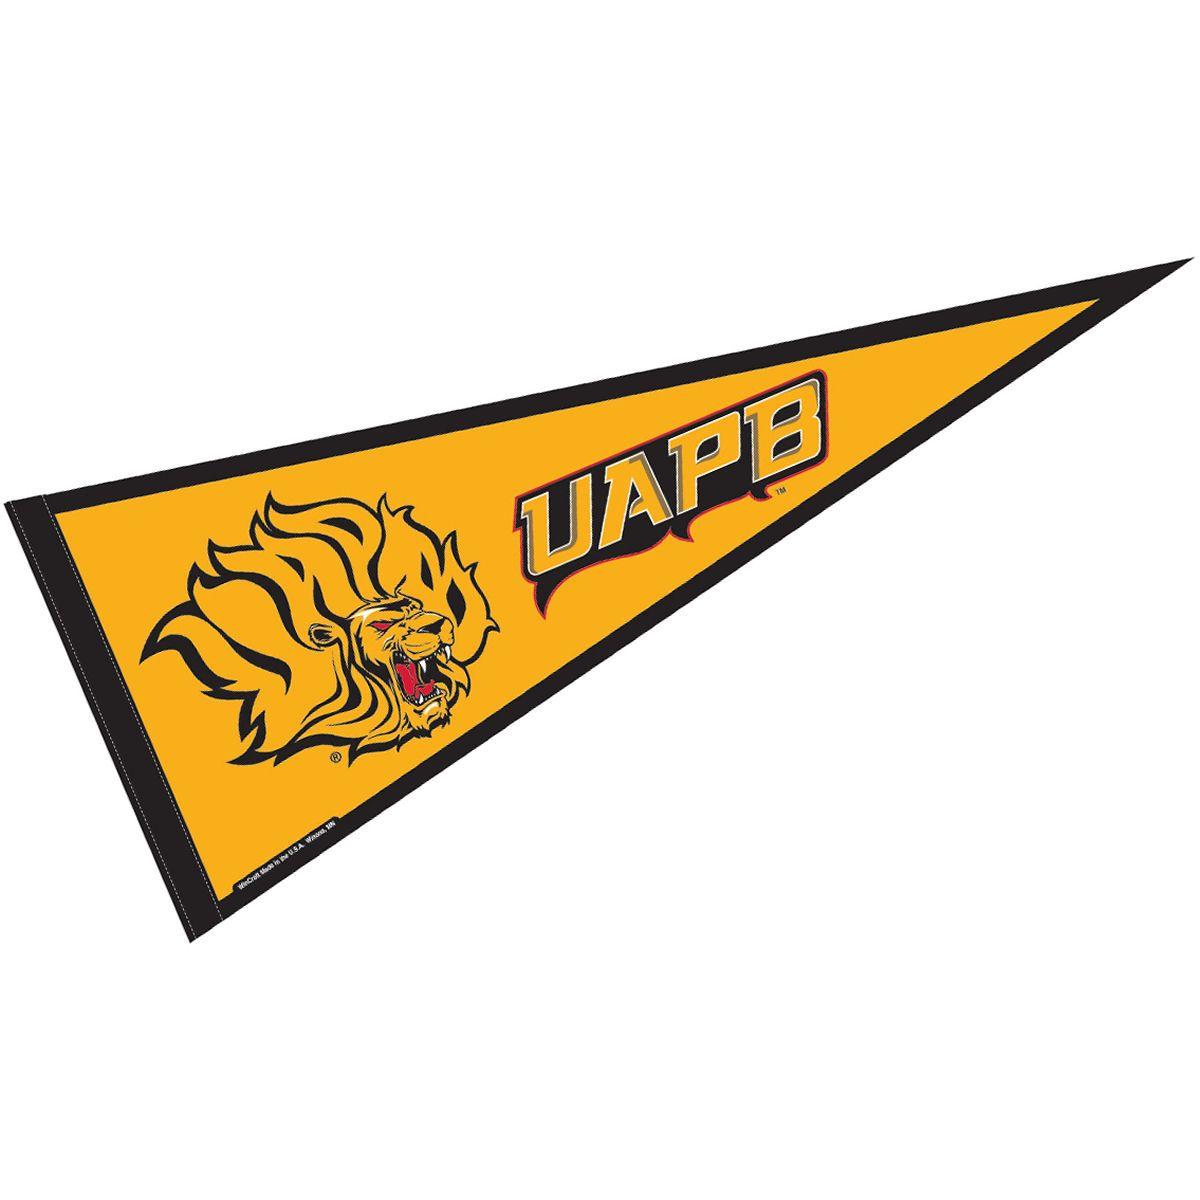 UAPB Golden Lions Logo - UAPB Golden Lions 12x30 Felt Pennant 848267005068 | eBay